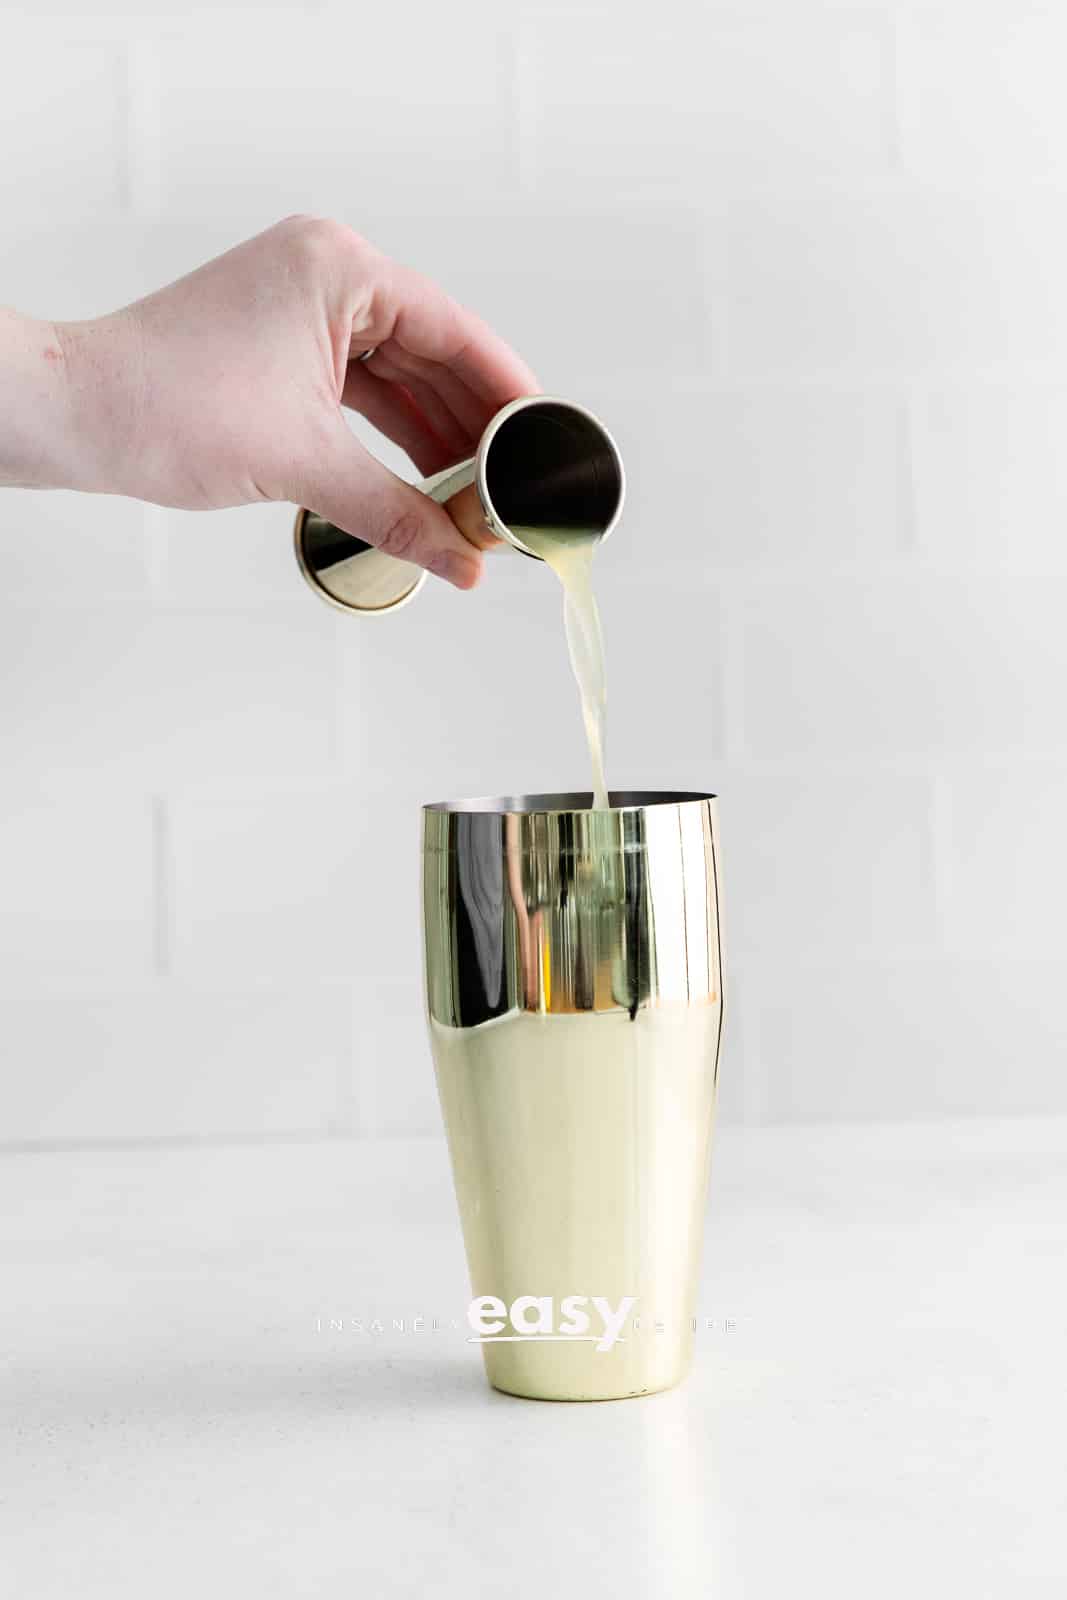 liquid being poured into golden drink shaker